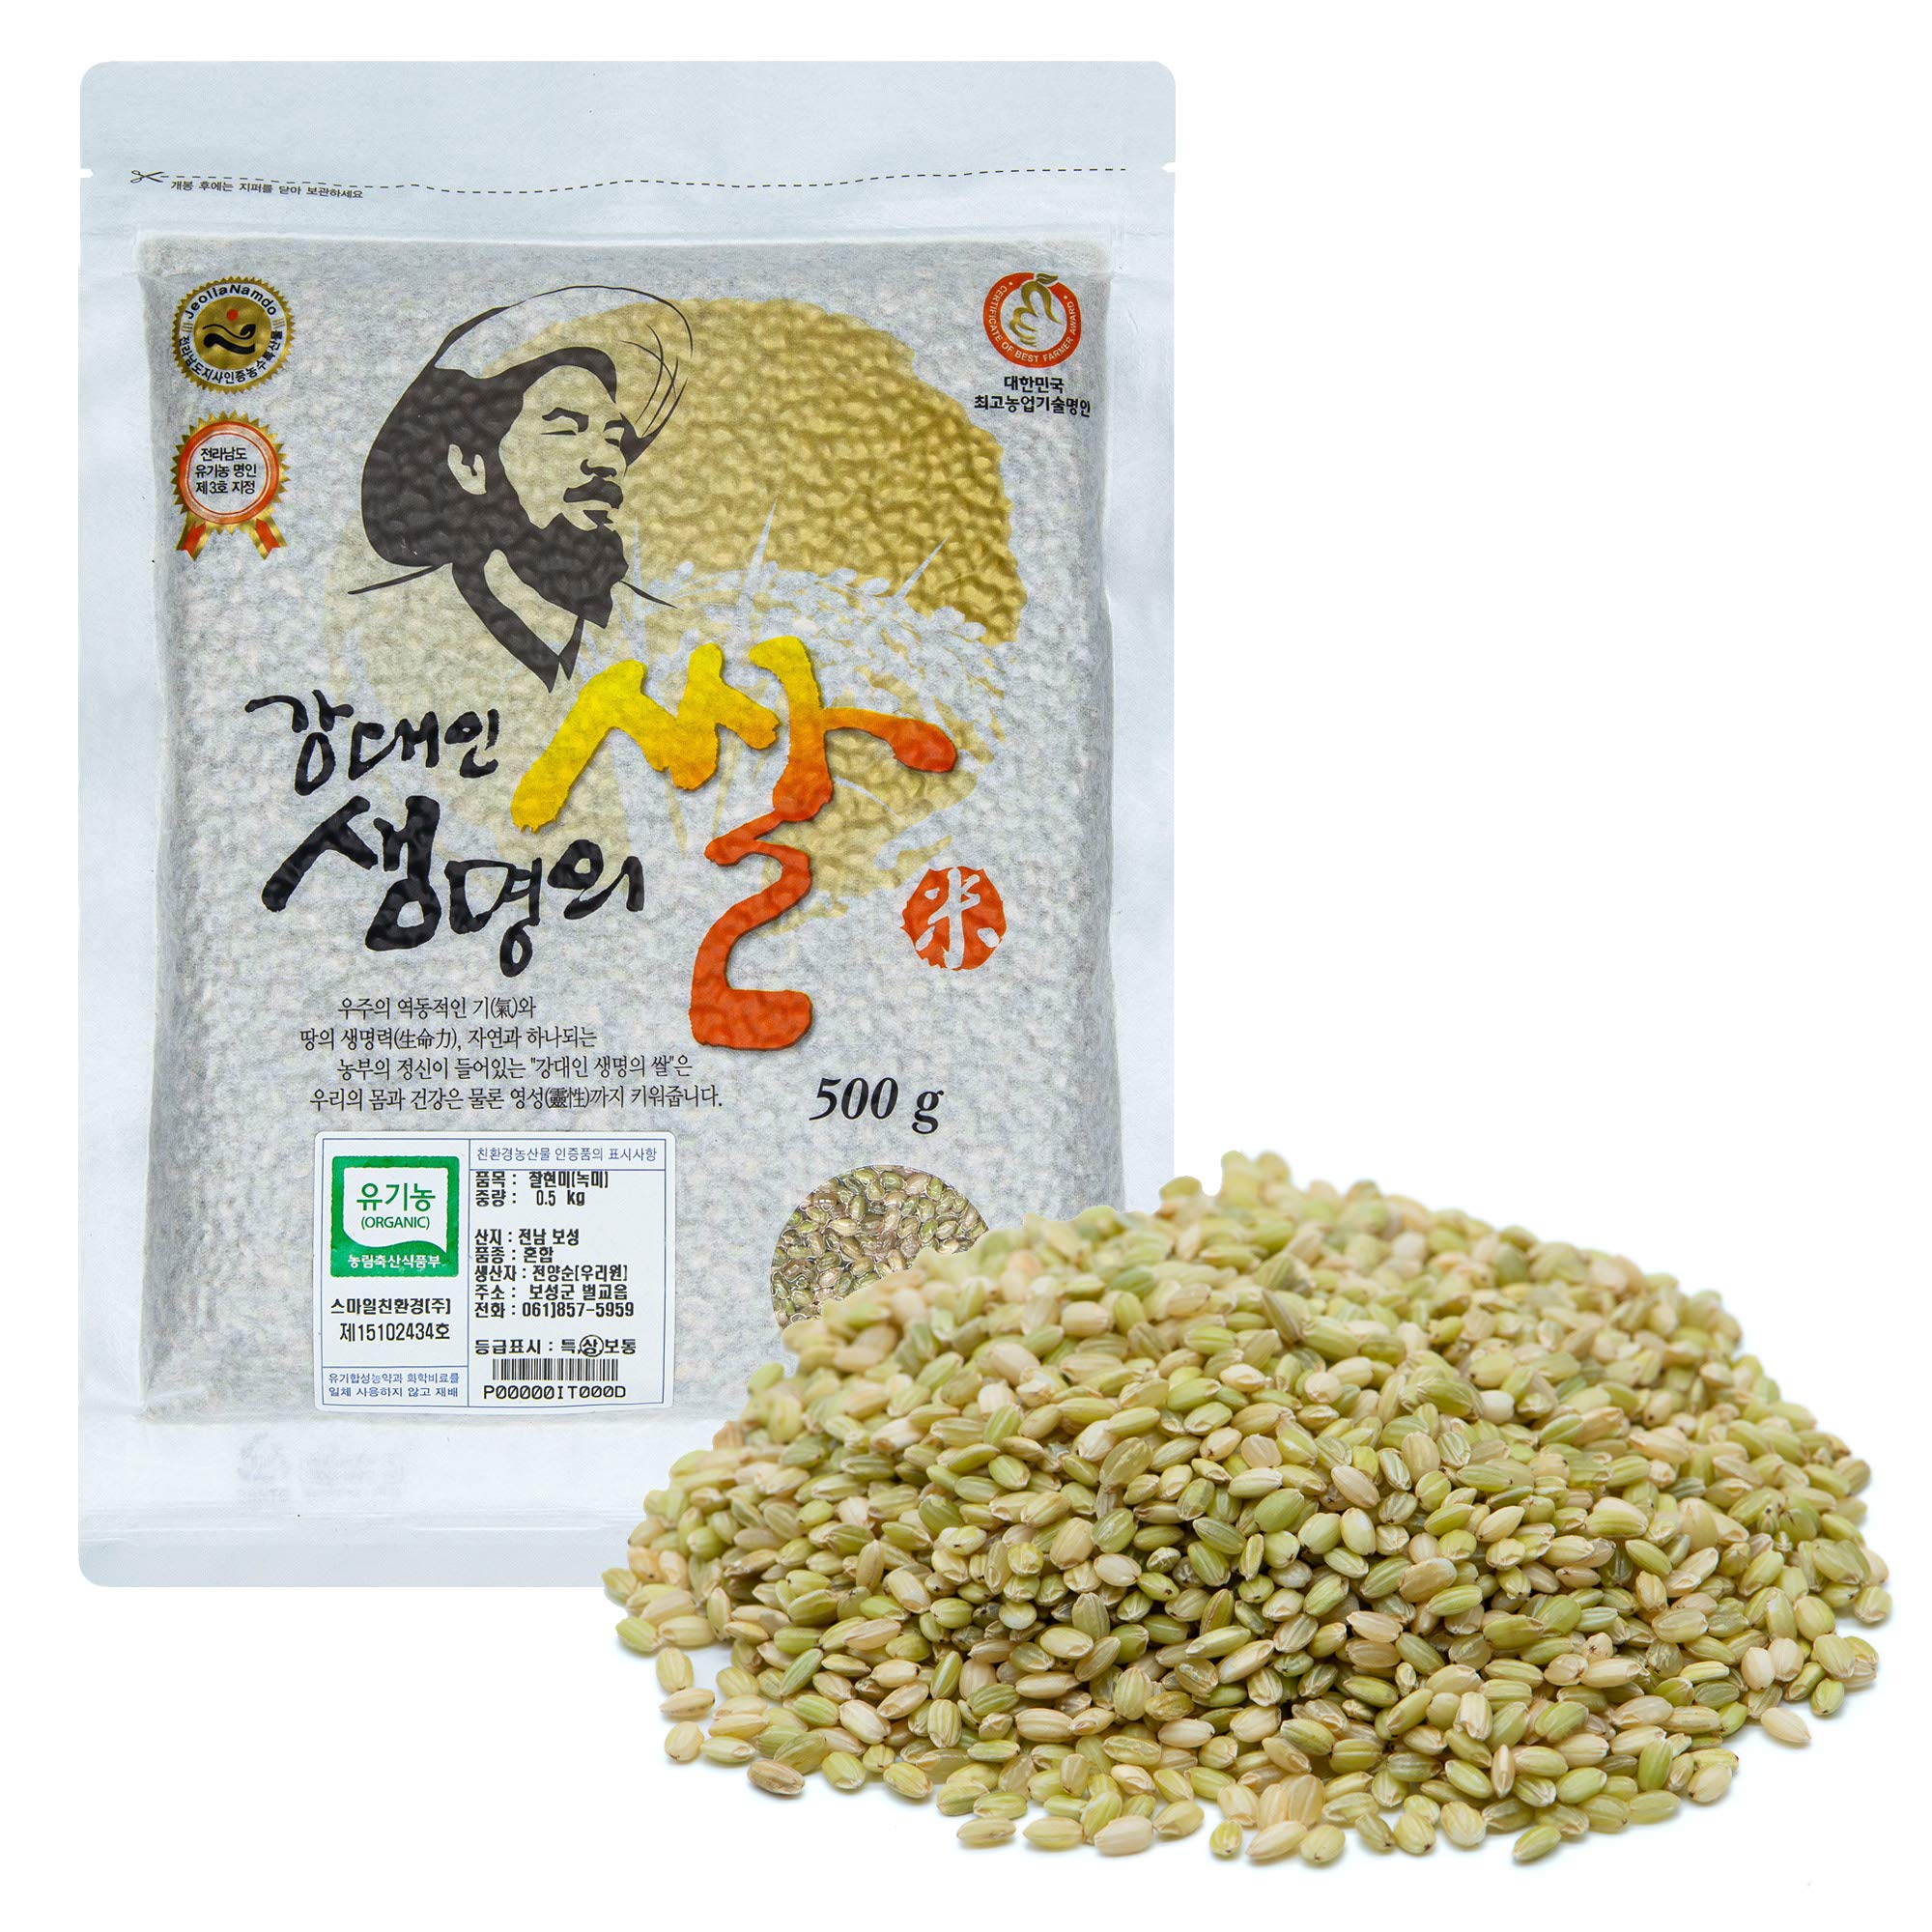 Premium Green Rice [ Korean Foods ] Organically Grown, Healthy Vegan Grains, Non GMO, No Pesticide [ JRND Foods ]